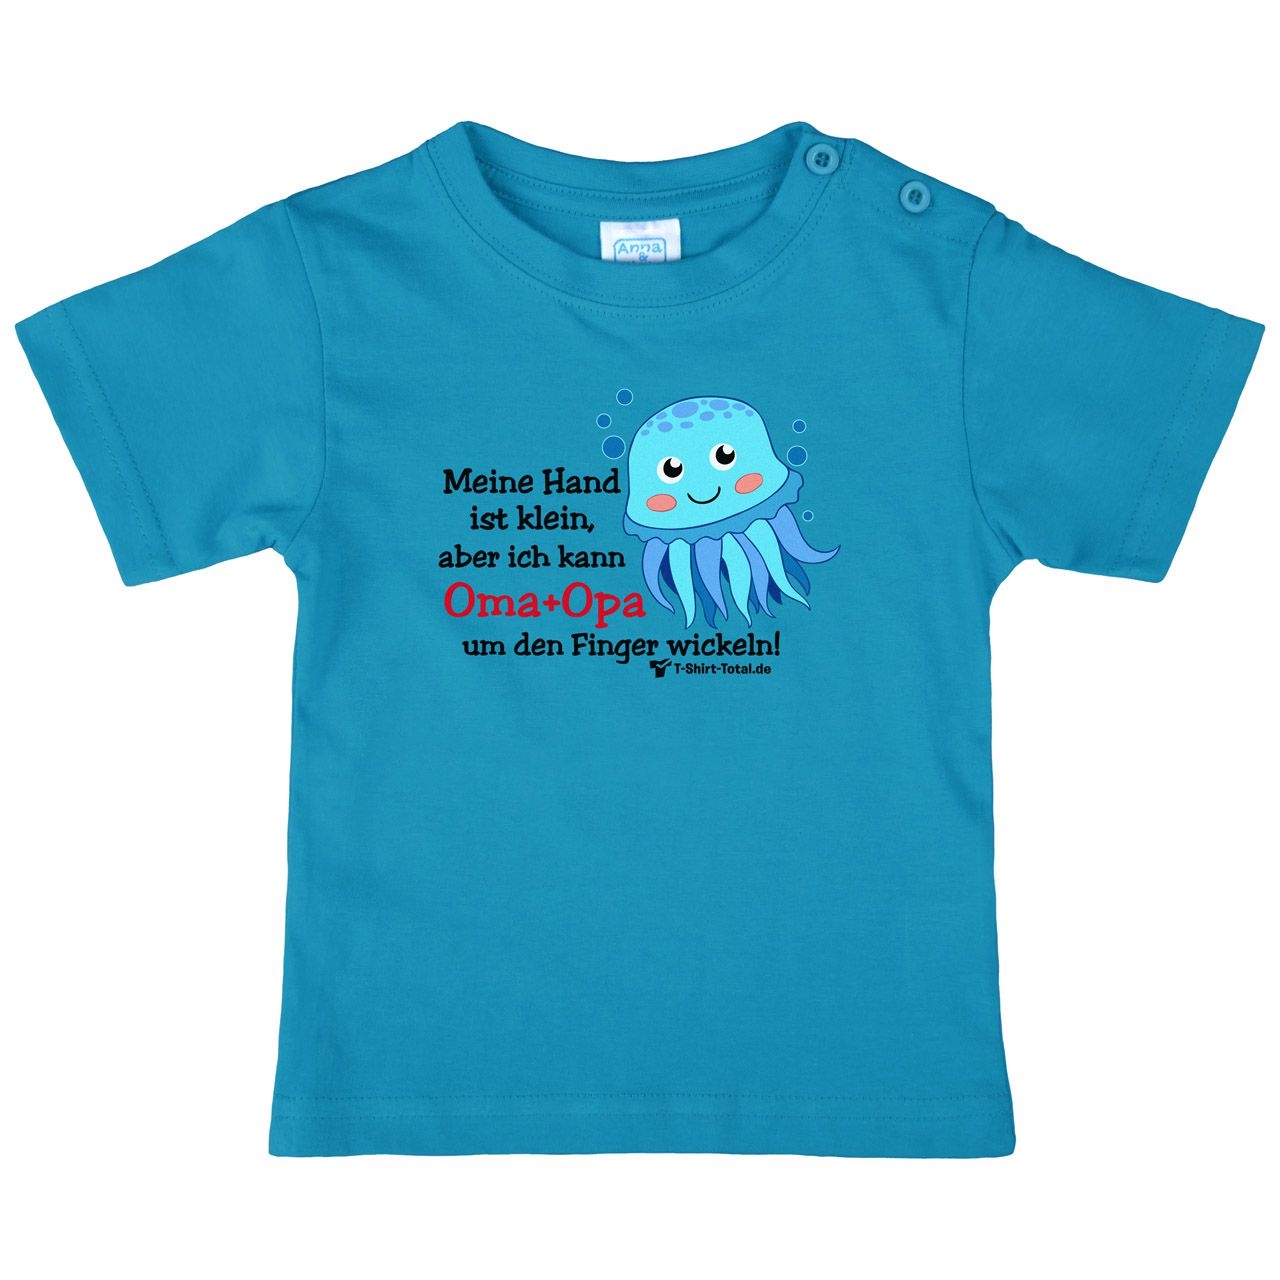 Kleine Hand Oma Opa Octopus Kinder T-Shirt türkis 68 / 74